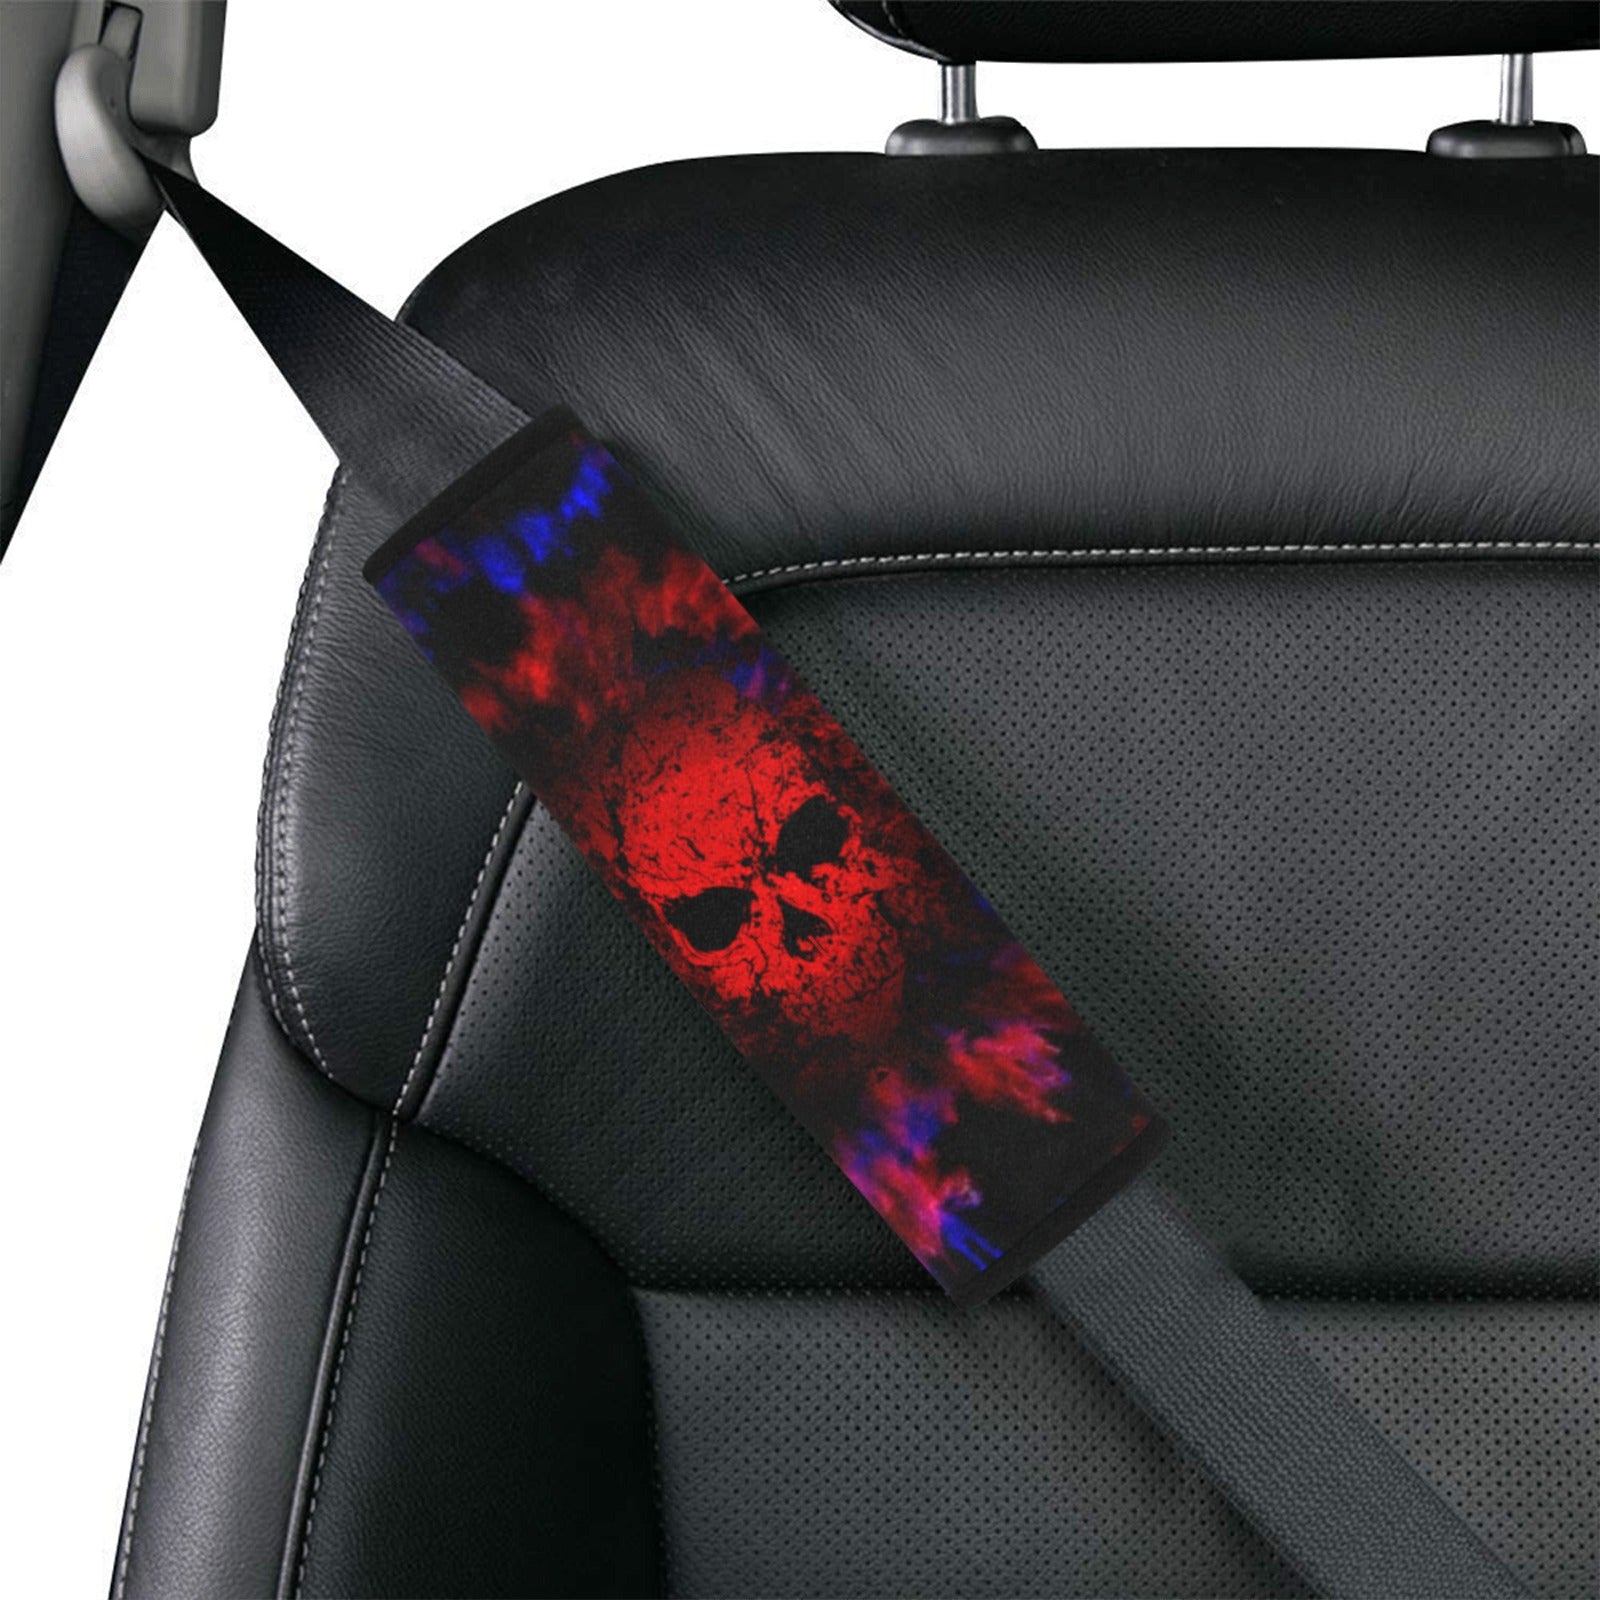 Crimson Chaos Seat Belt Cover 7" x 10"